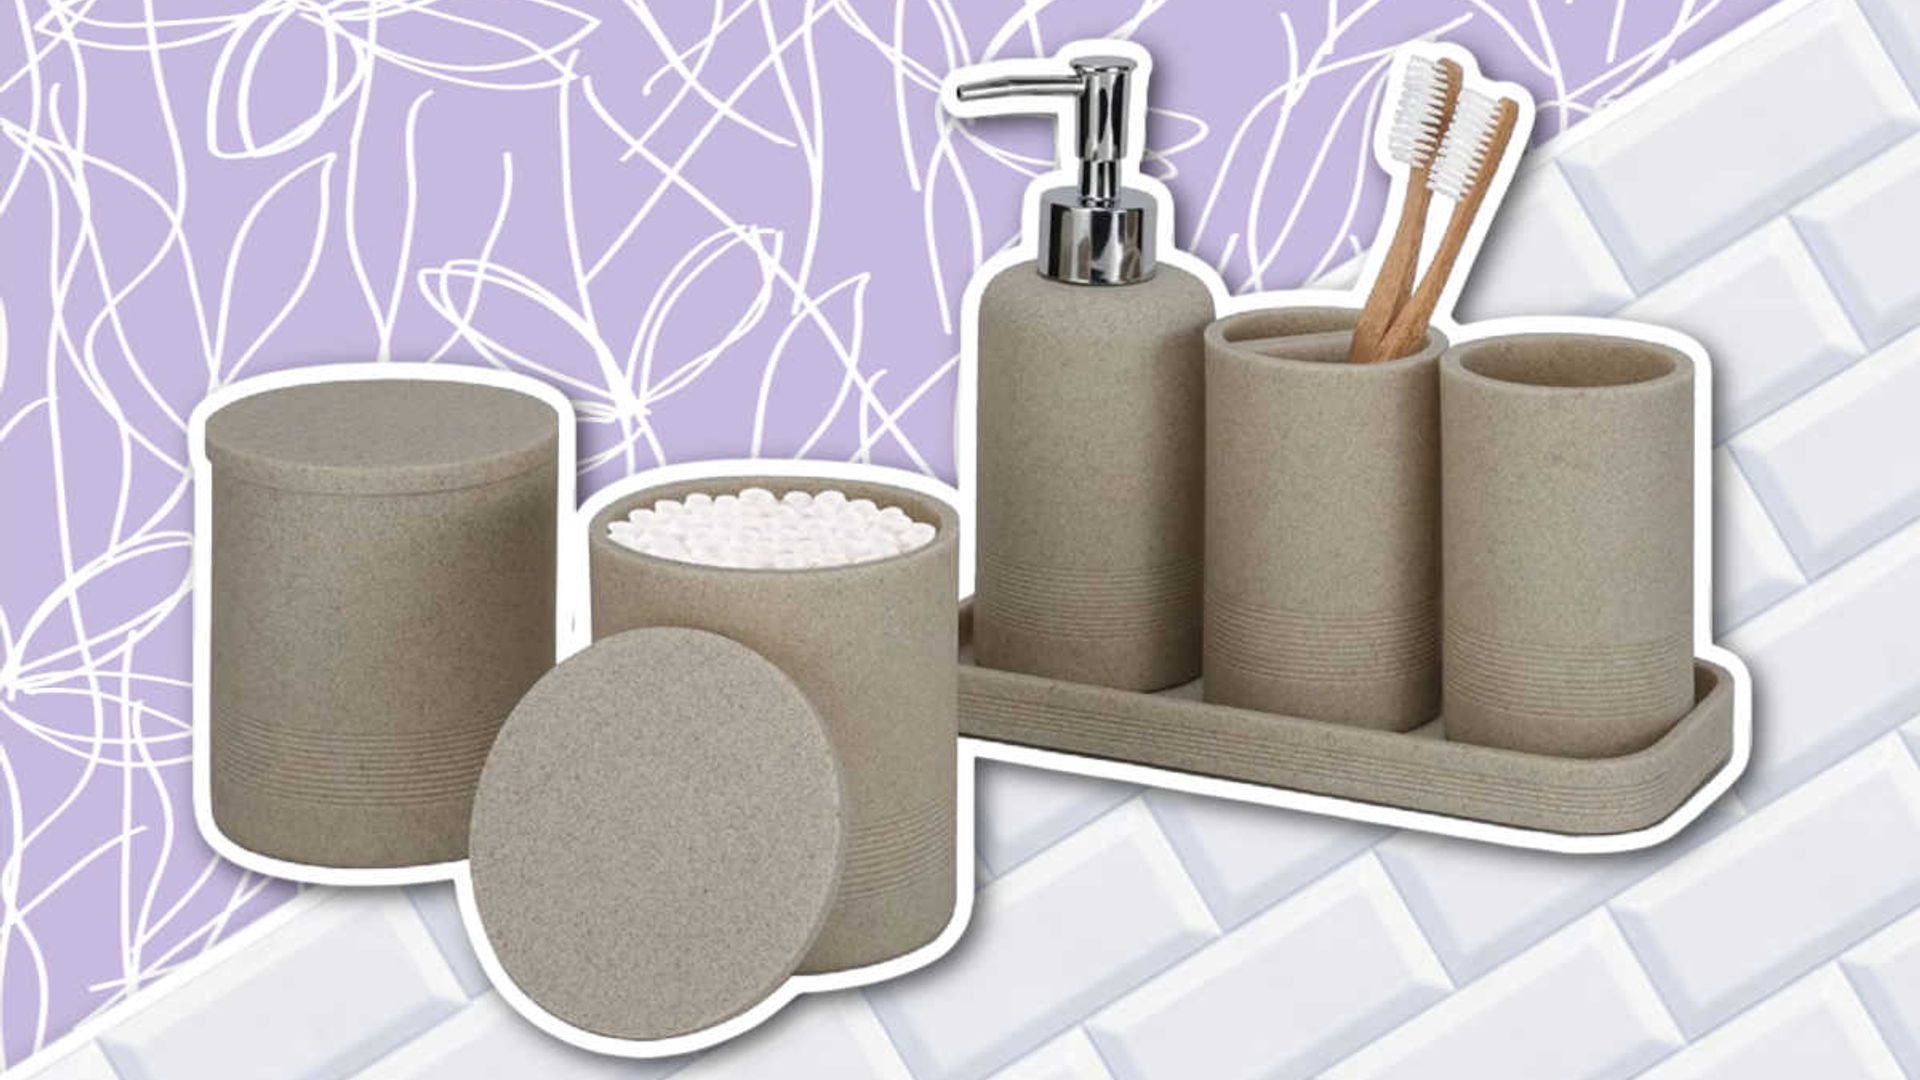 kim kardashian concrete neutral bathroom accessories dupes